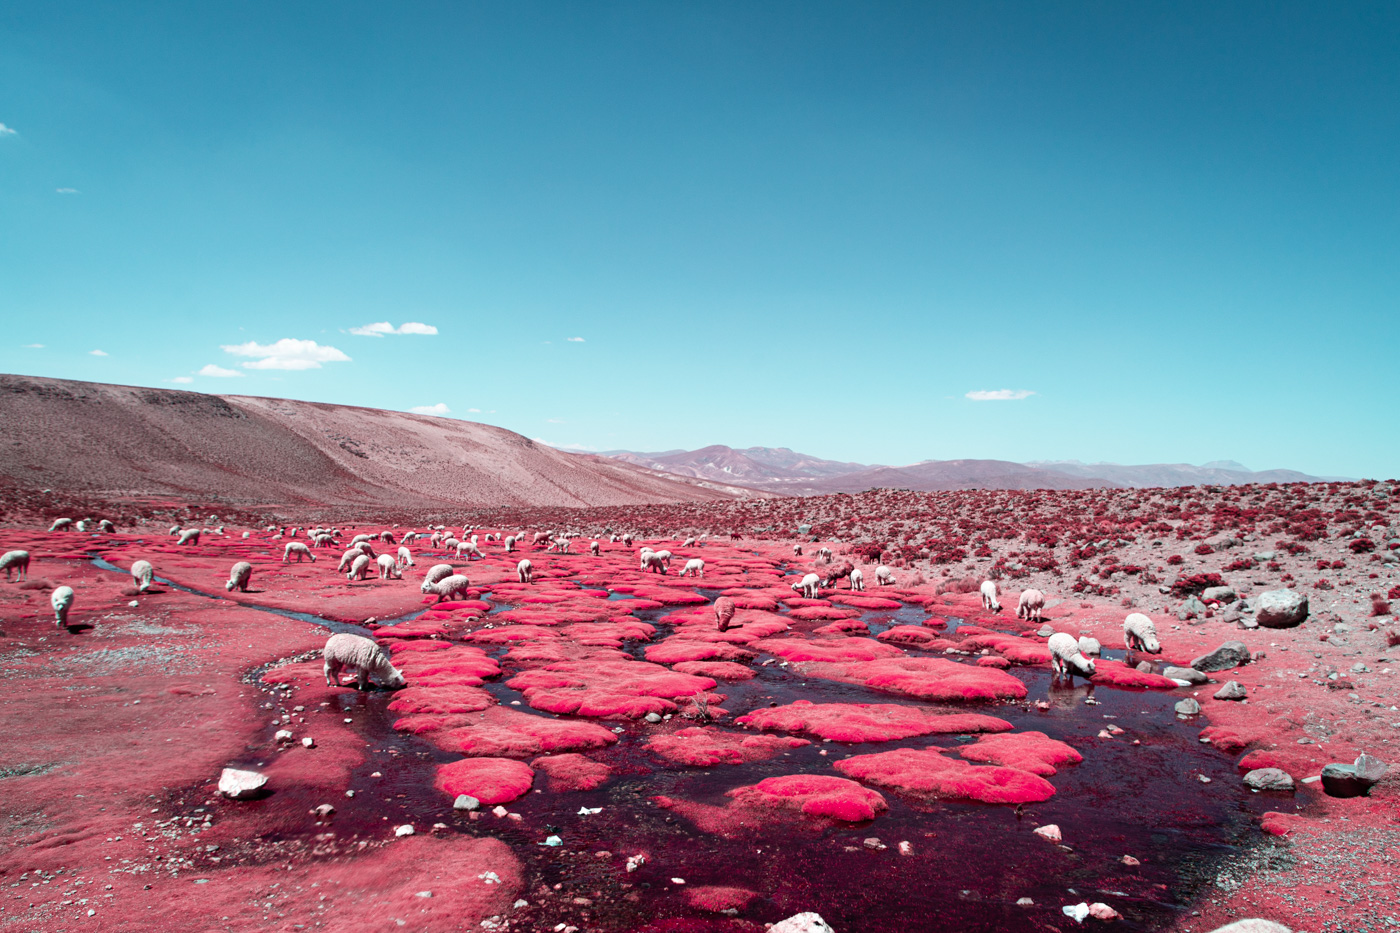 Paolo Pettigiani Captures the Magic of Peru and Bolivia in Infrared